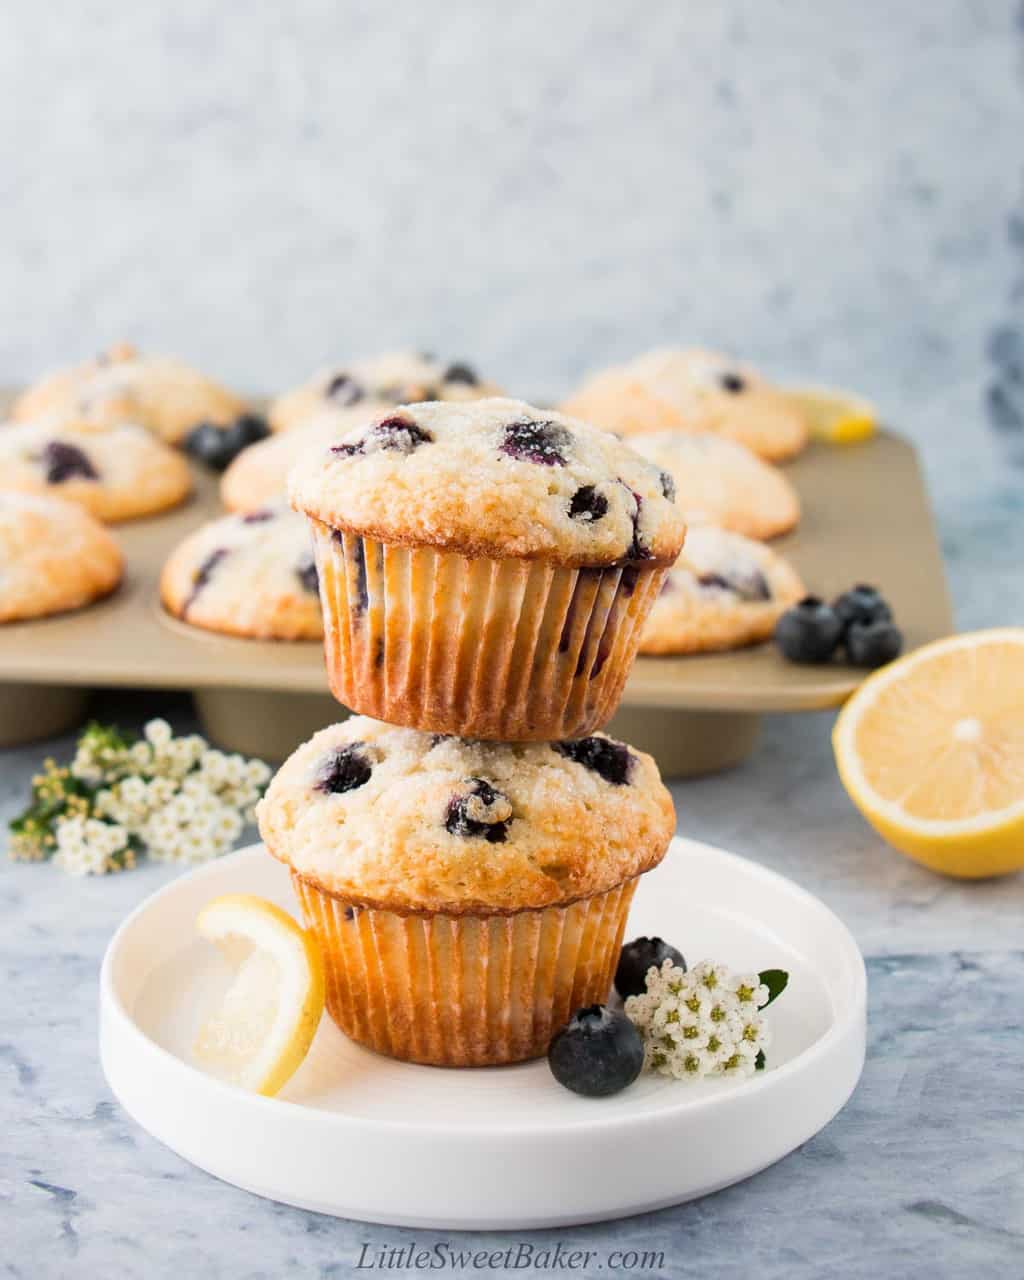 https://www.littlesweetbaker.com/wp-content/uploads/2021/06/blueberry-lemon-muffins-3.jpg